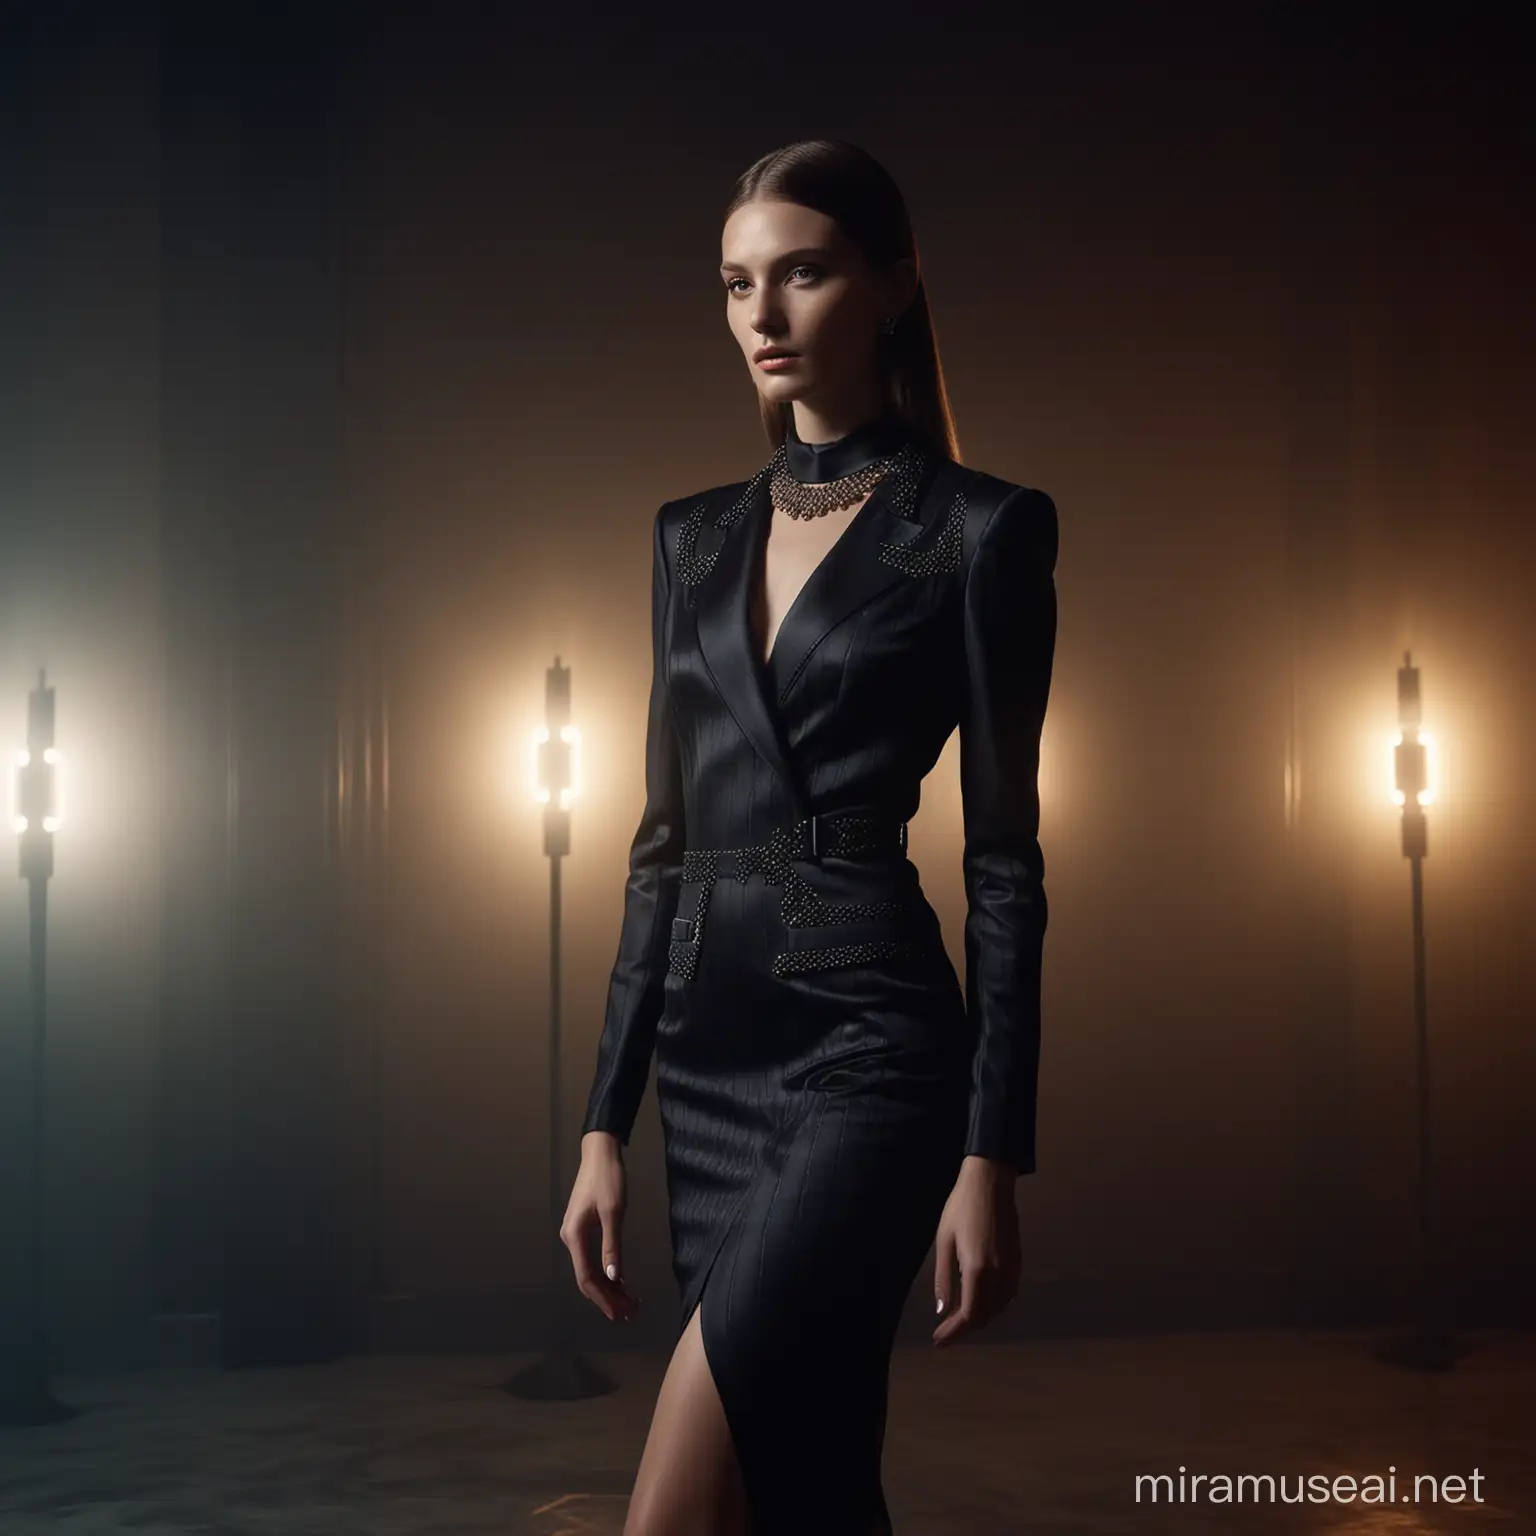 Elegant Fashion Photoshoot with Modern Dress and Dramatic Lighting